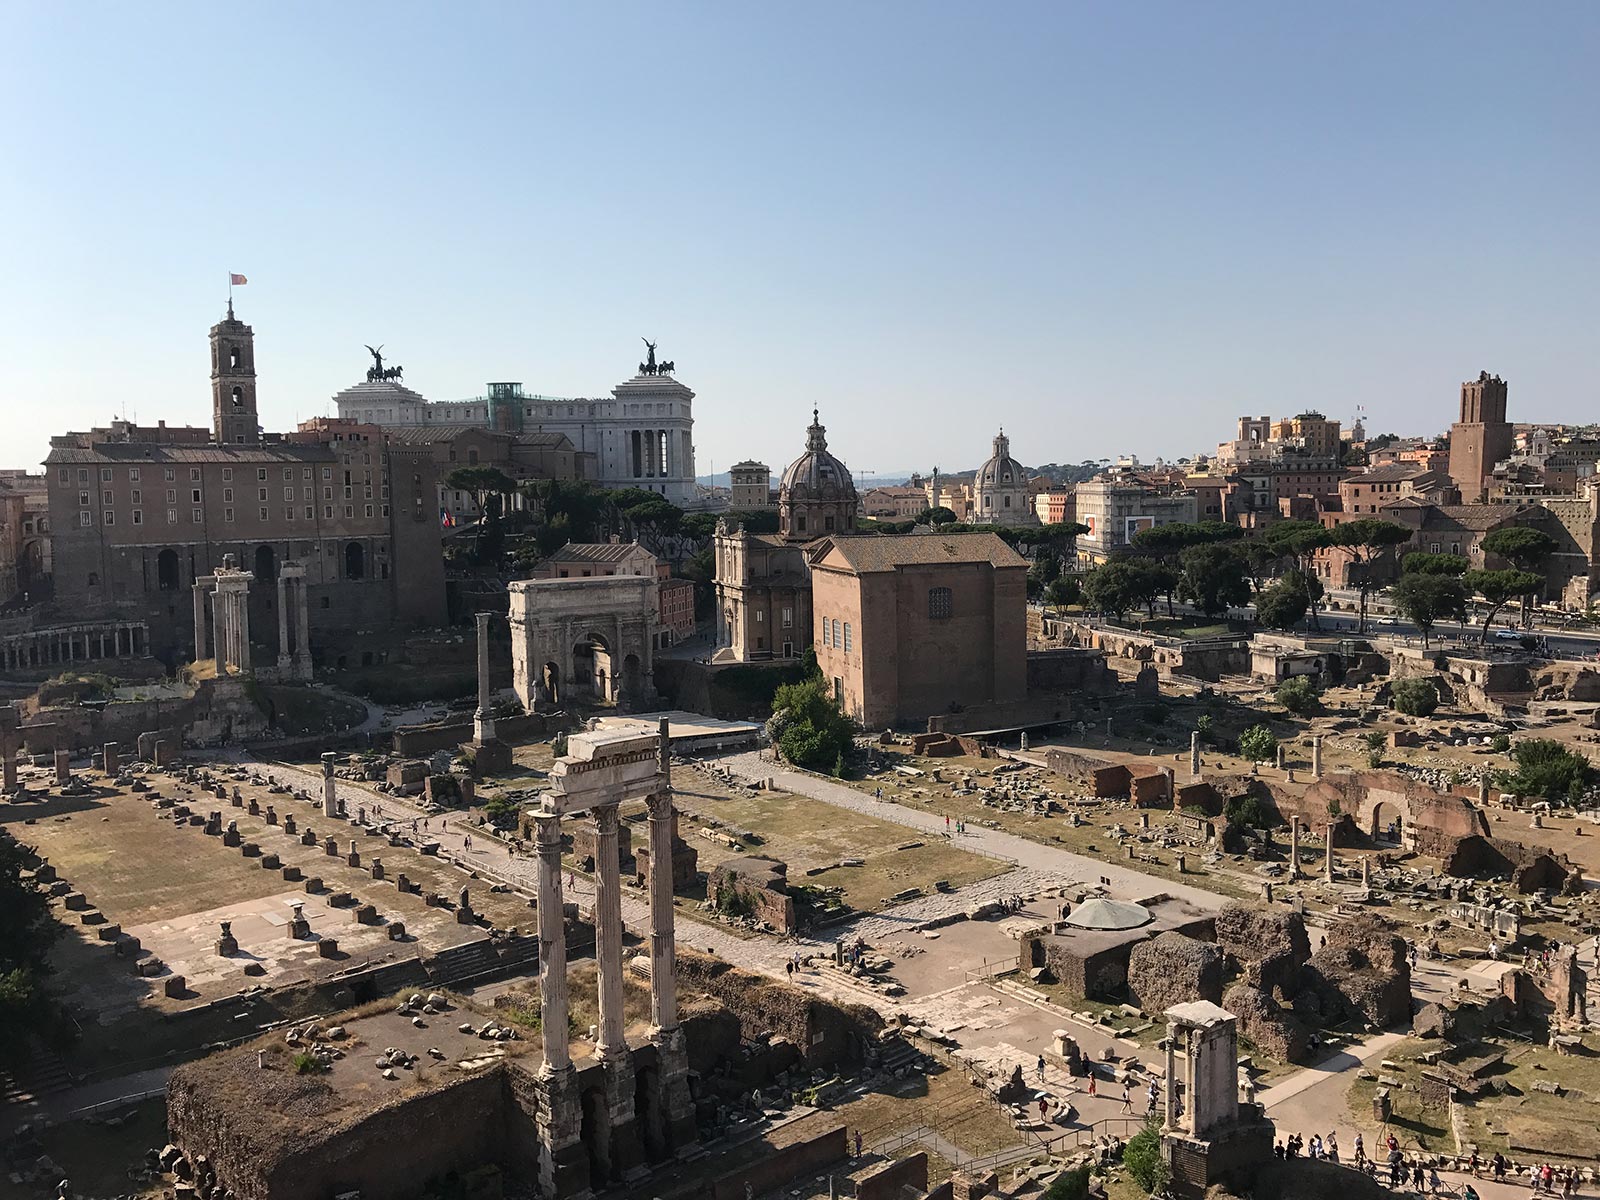 Roman forum in Rome, Italy. The Colosseum & Rome, the last wonder